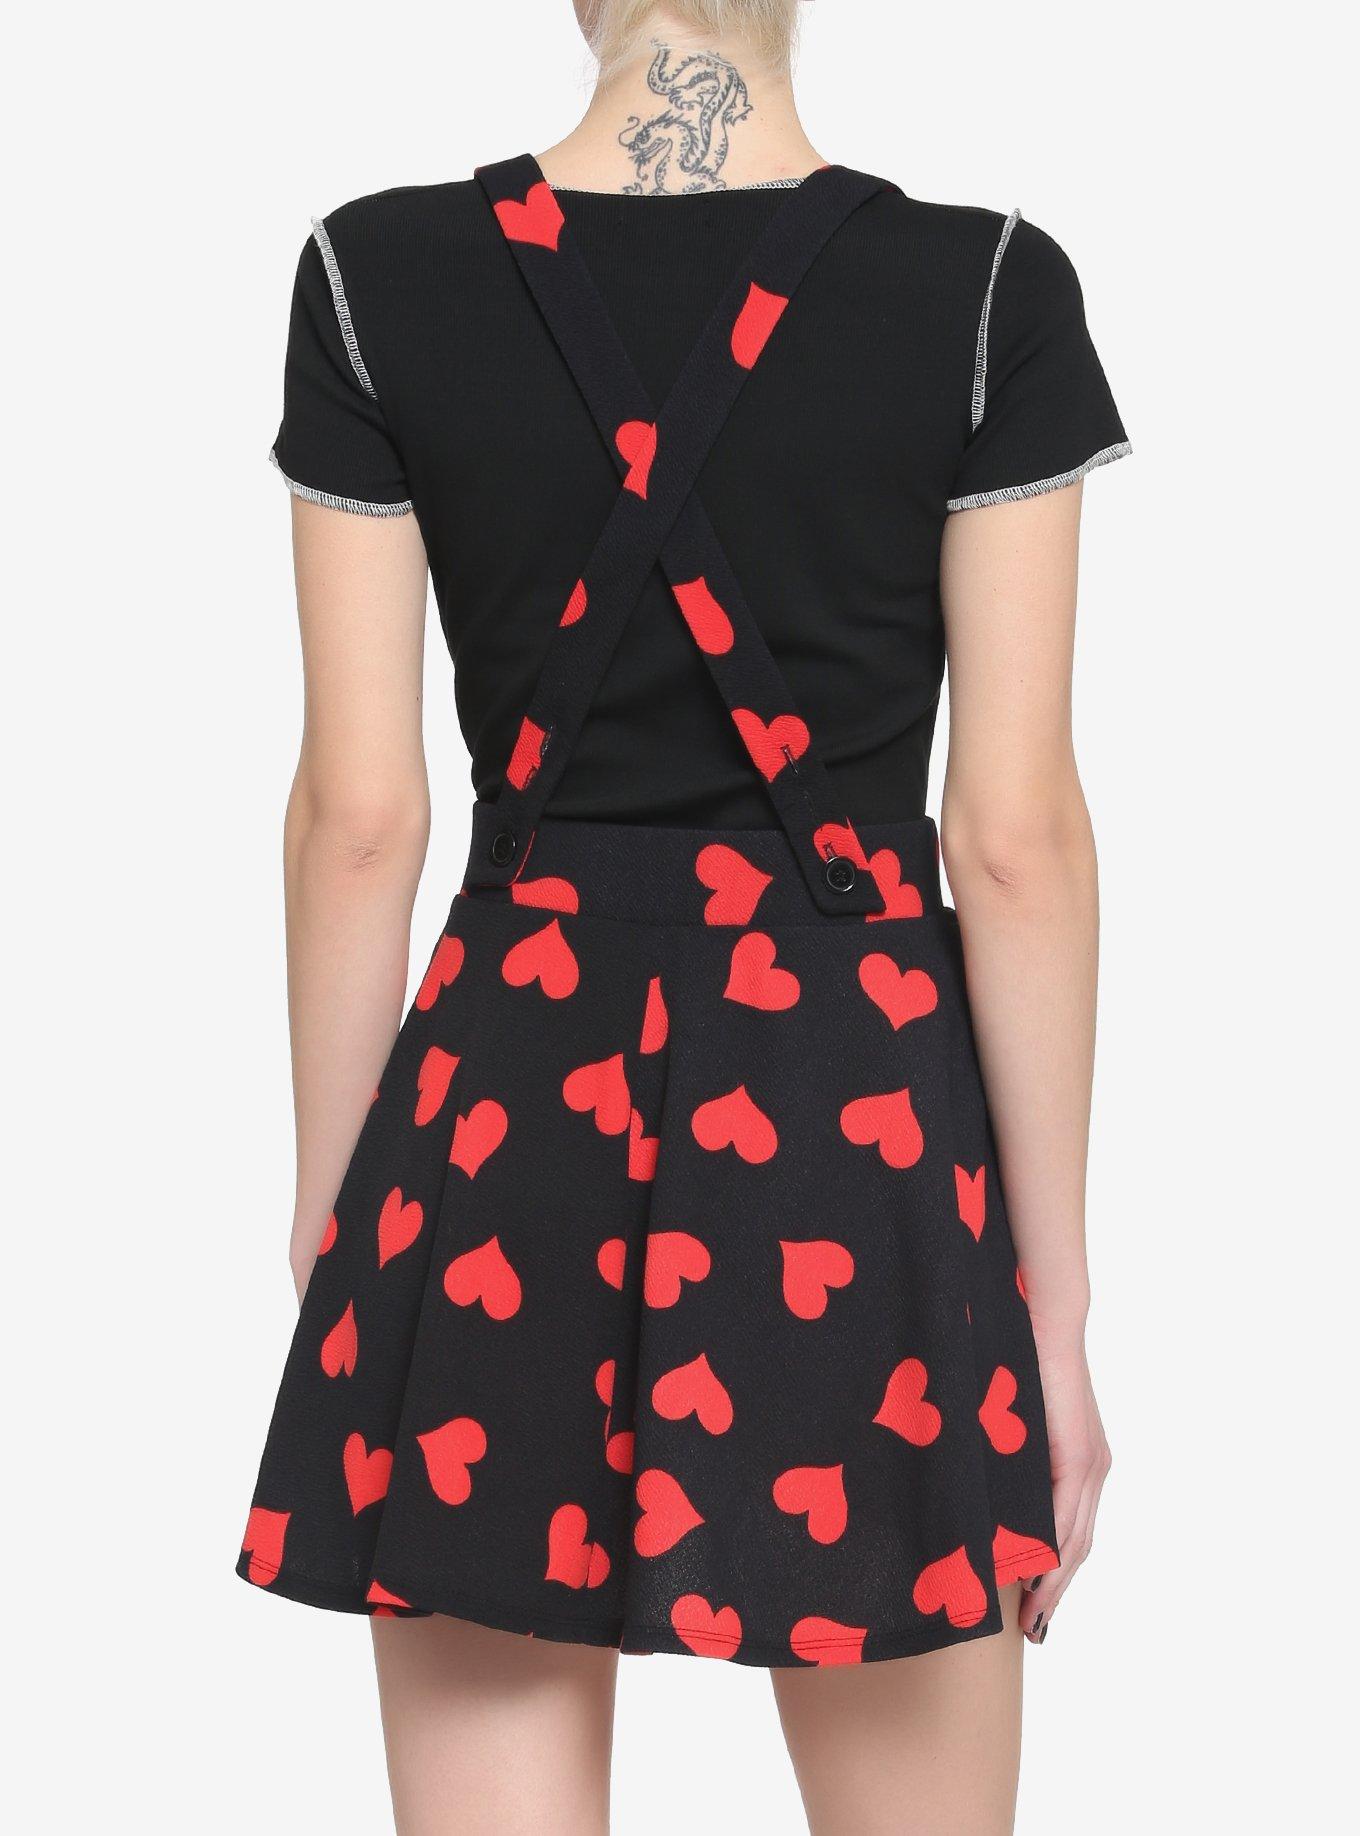 Red Hearts Black Suspender Skirt, PINK, alternate